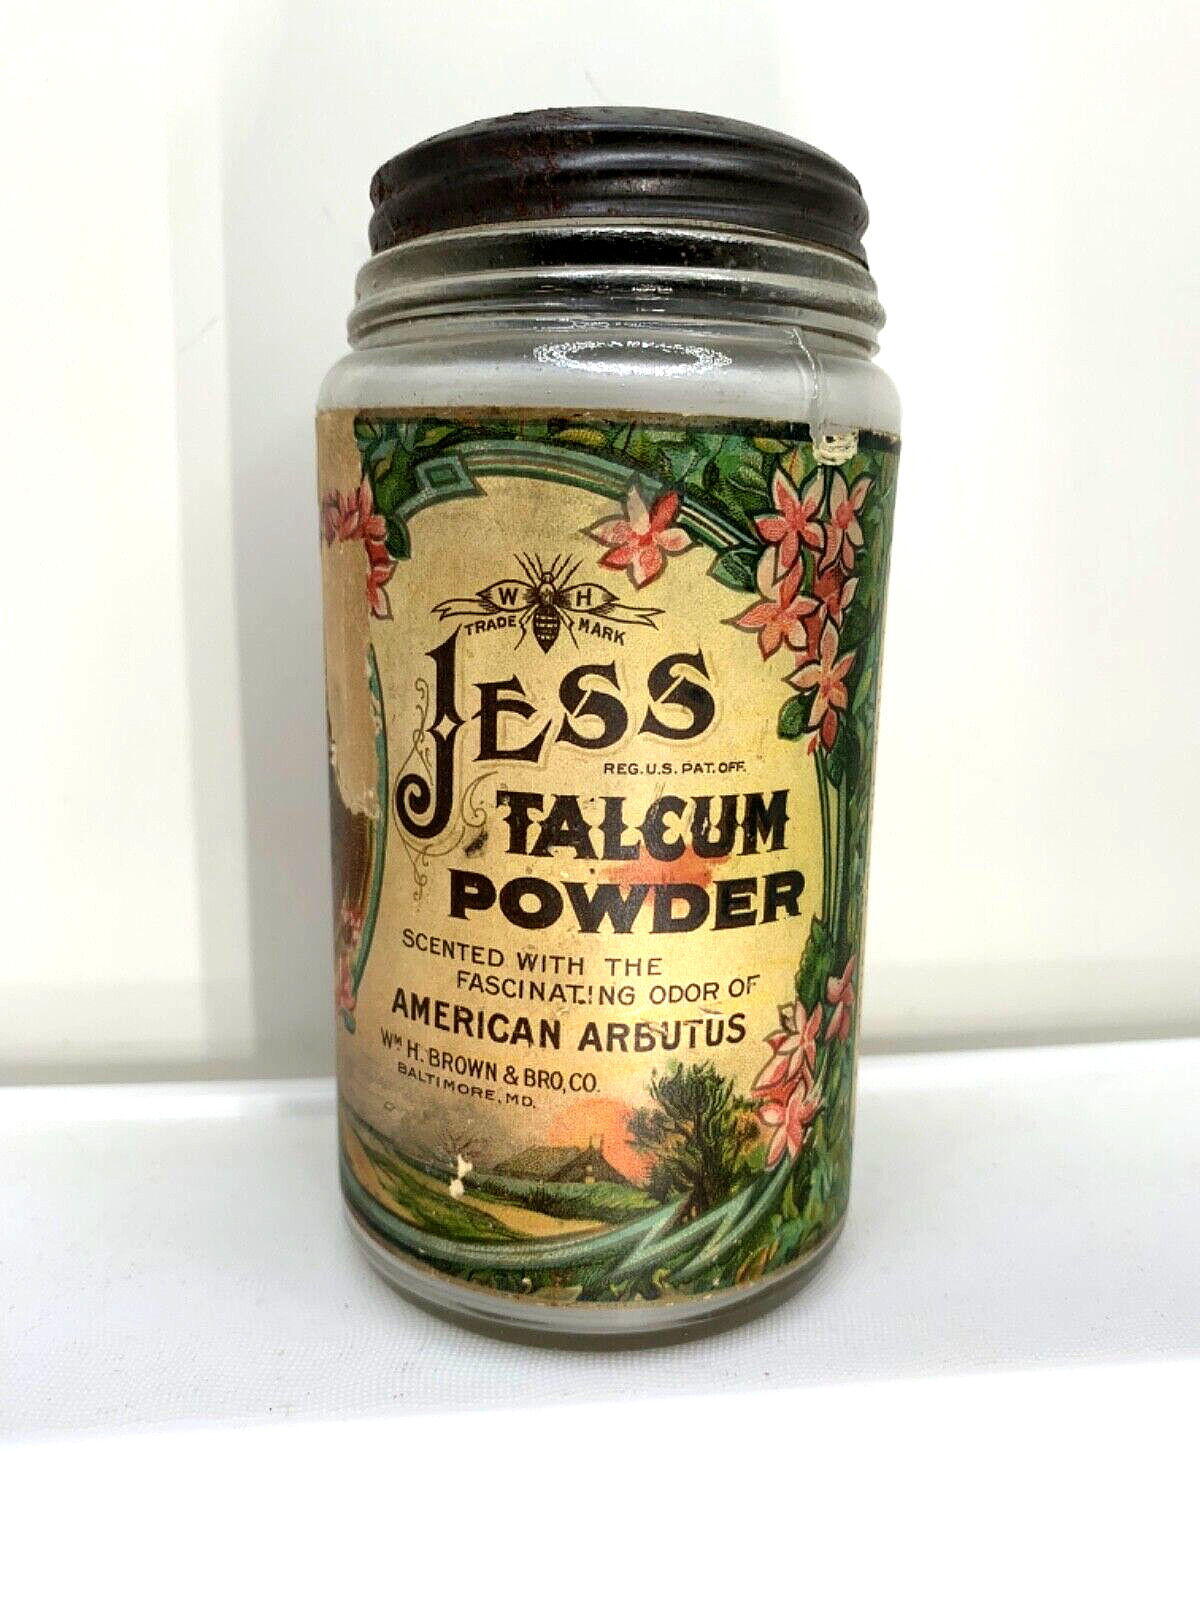 Lovely Antique perfumed powder jar.  Jess, American Arbitus by HM Brown.  1900